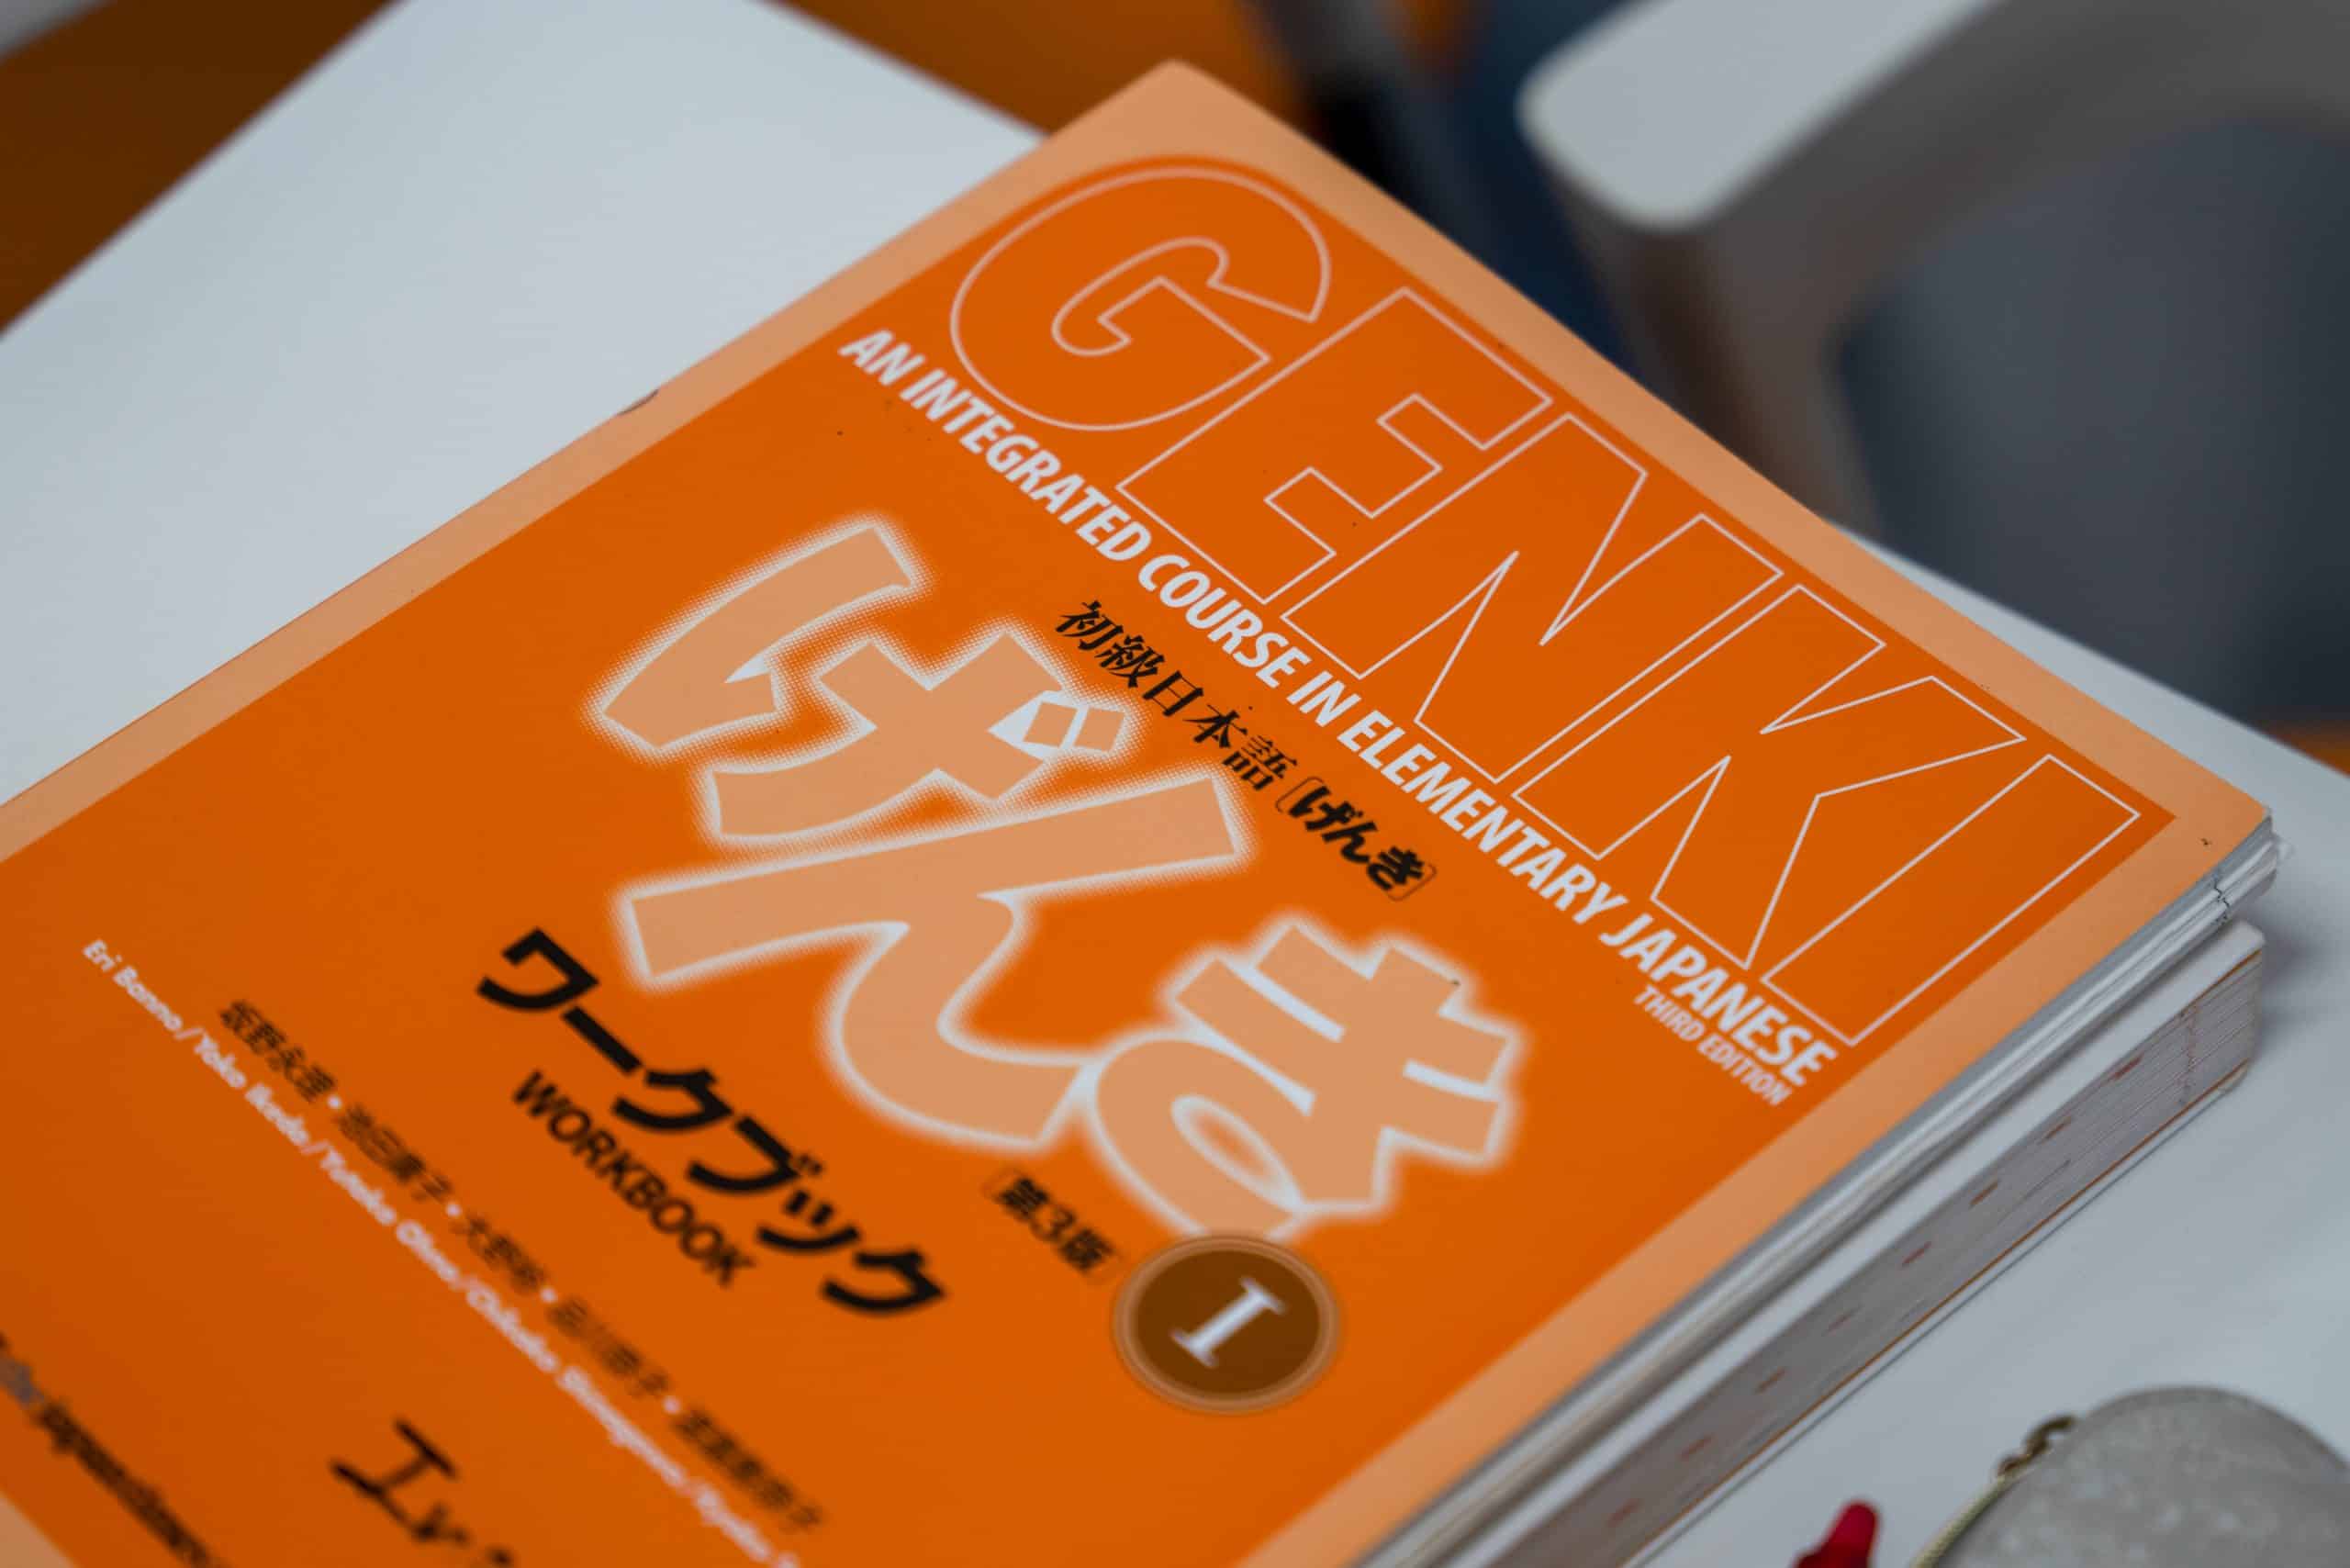 Genki textbook on desk